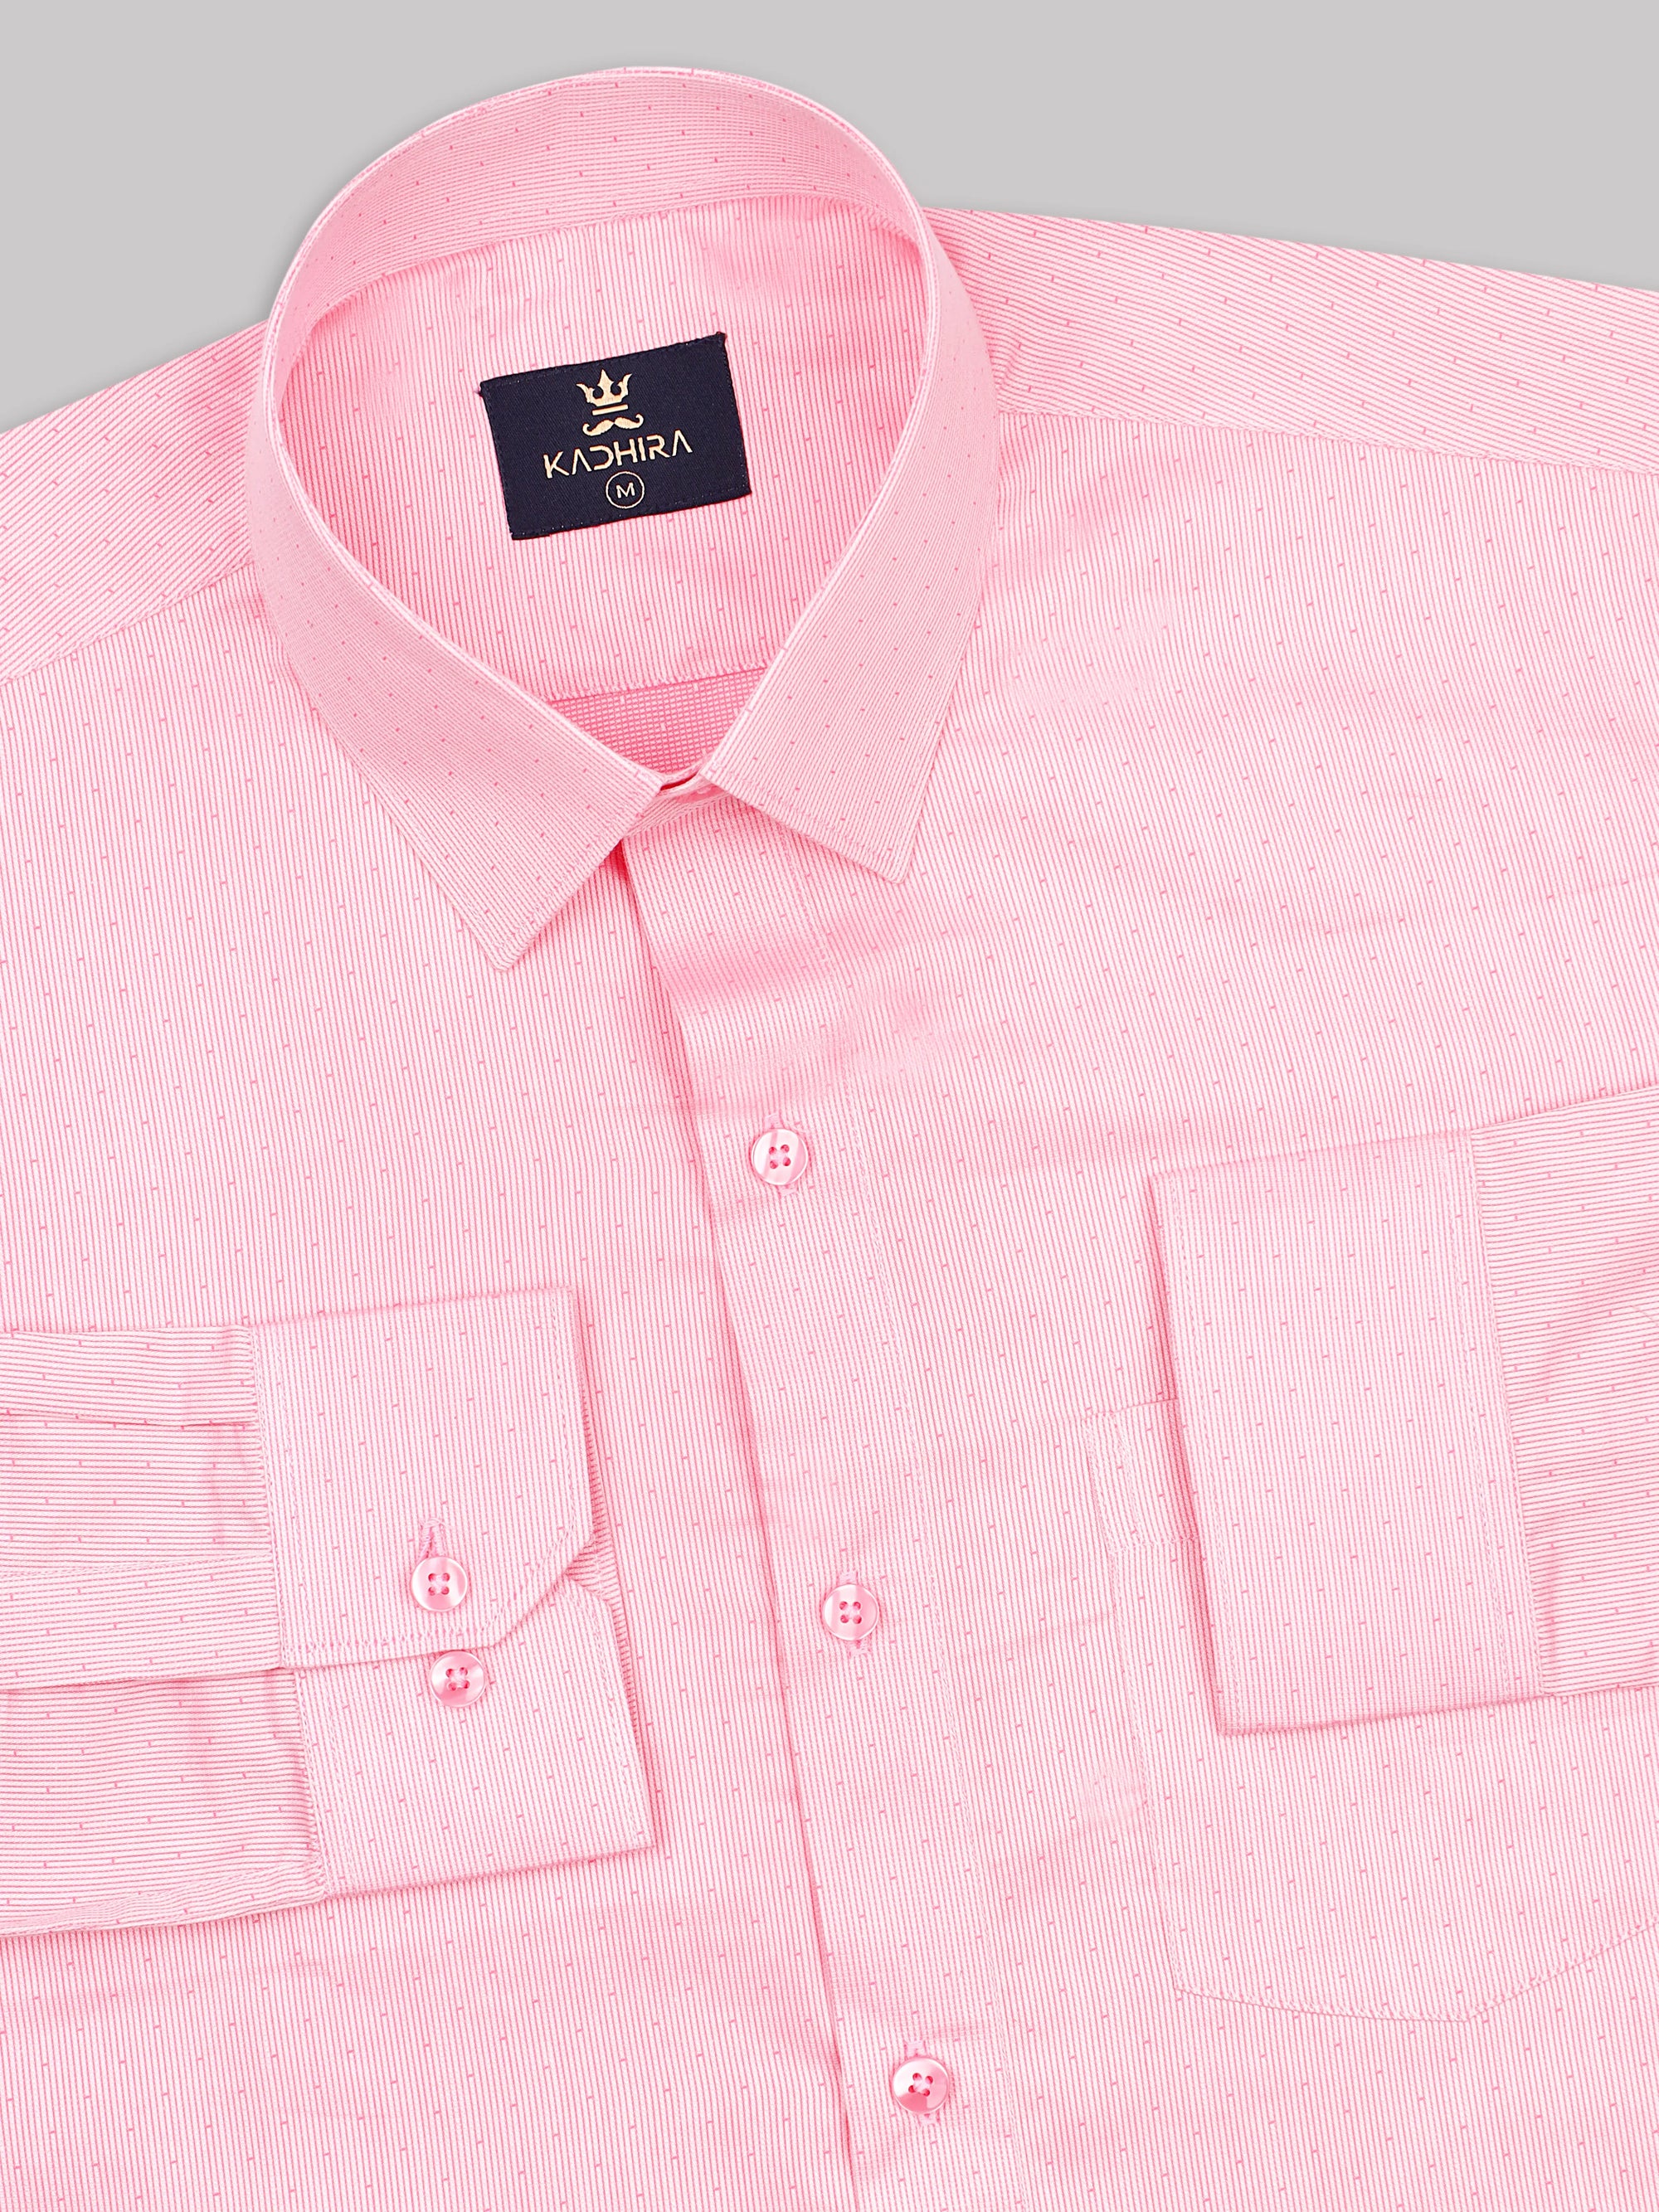 Light Pink Dobby Textured Jacquard Cotton Shirt